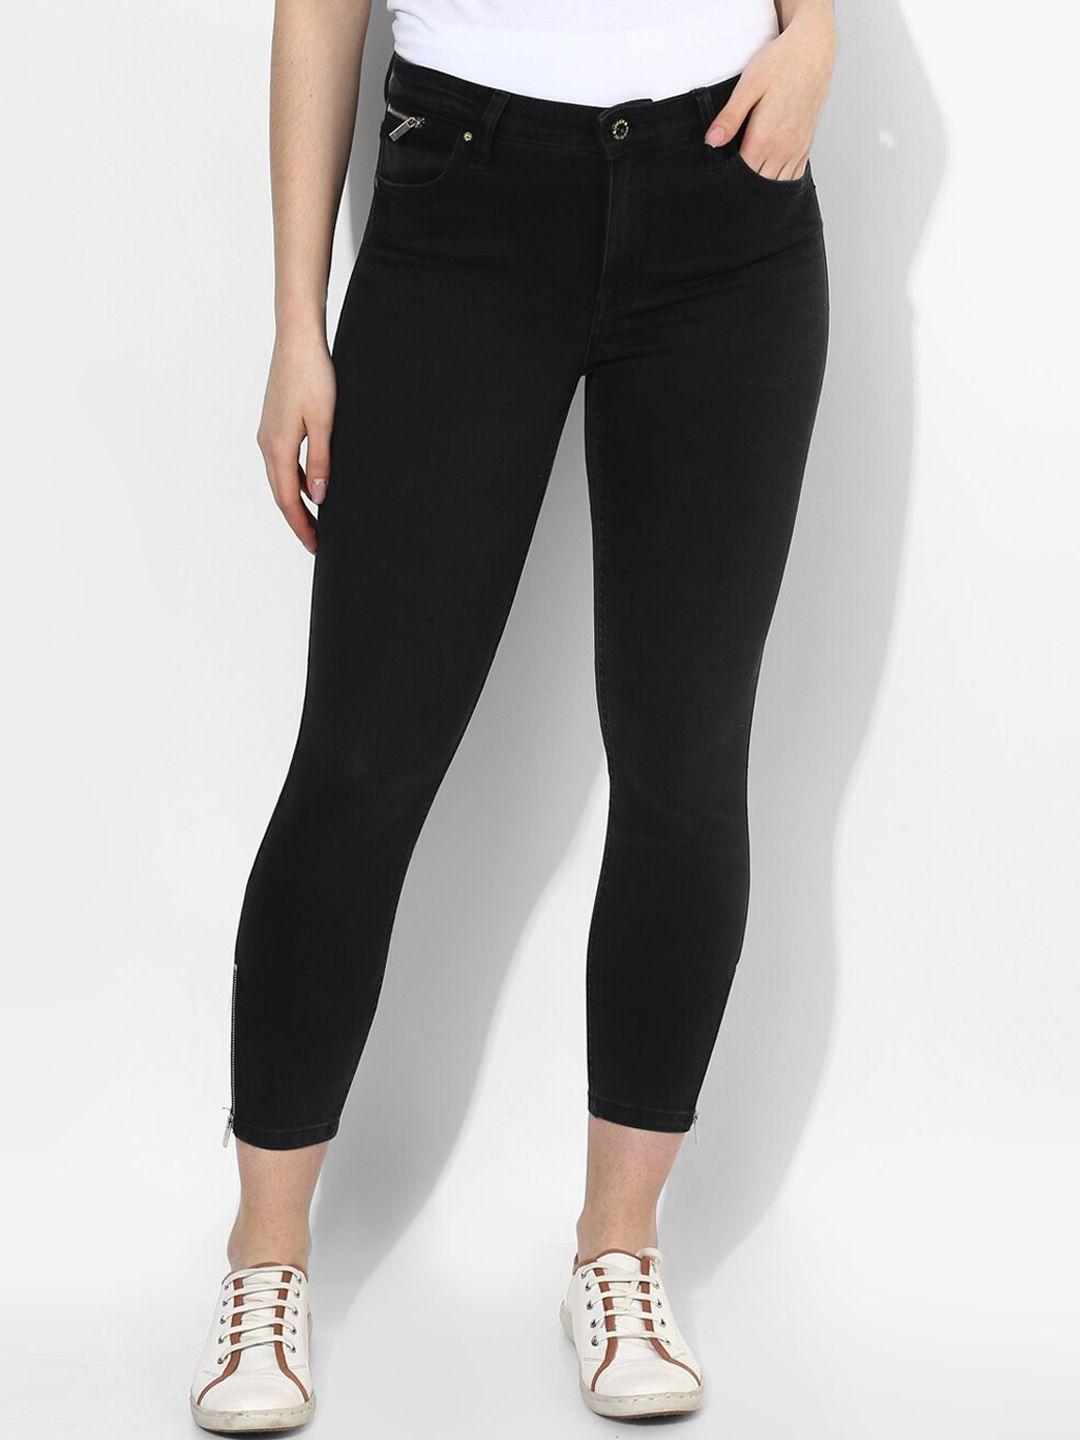 lovegen women black skinny fit high-rise stretchable jeans